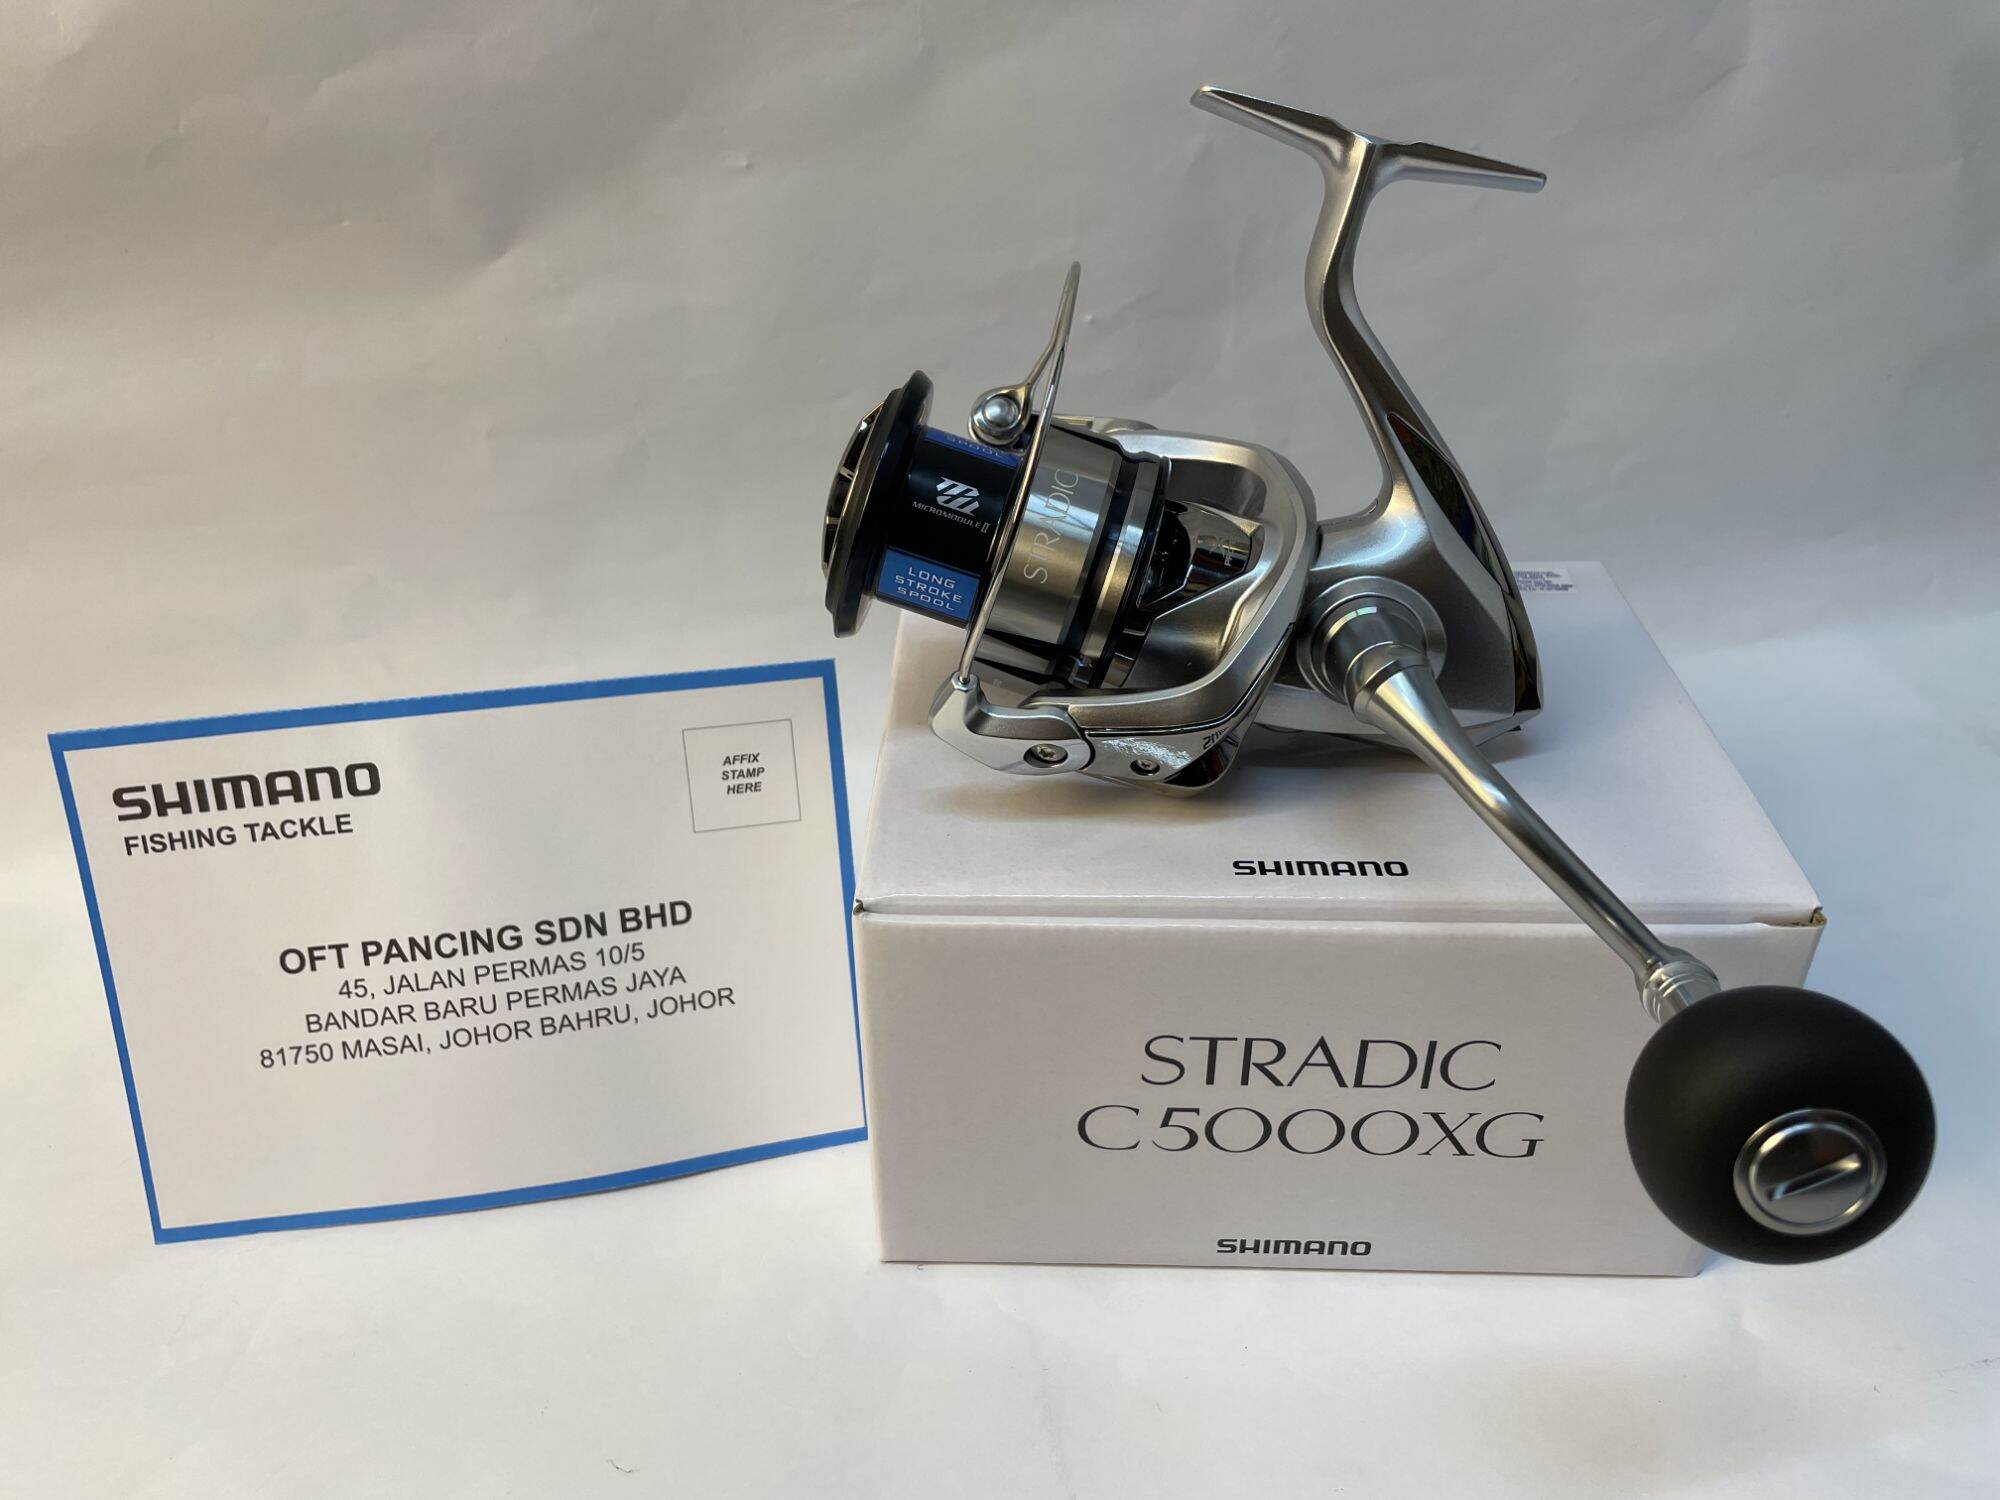 19' STRADIC FL 1000-C5000XG SHIMANO REEL WITH 1 YEAR WARRANTY & FREE GIFT